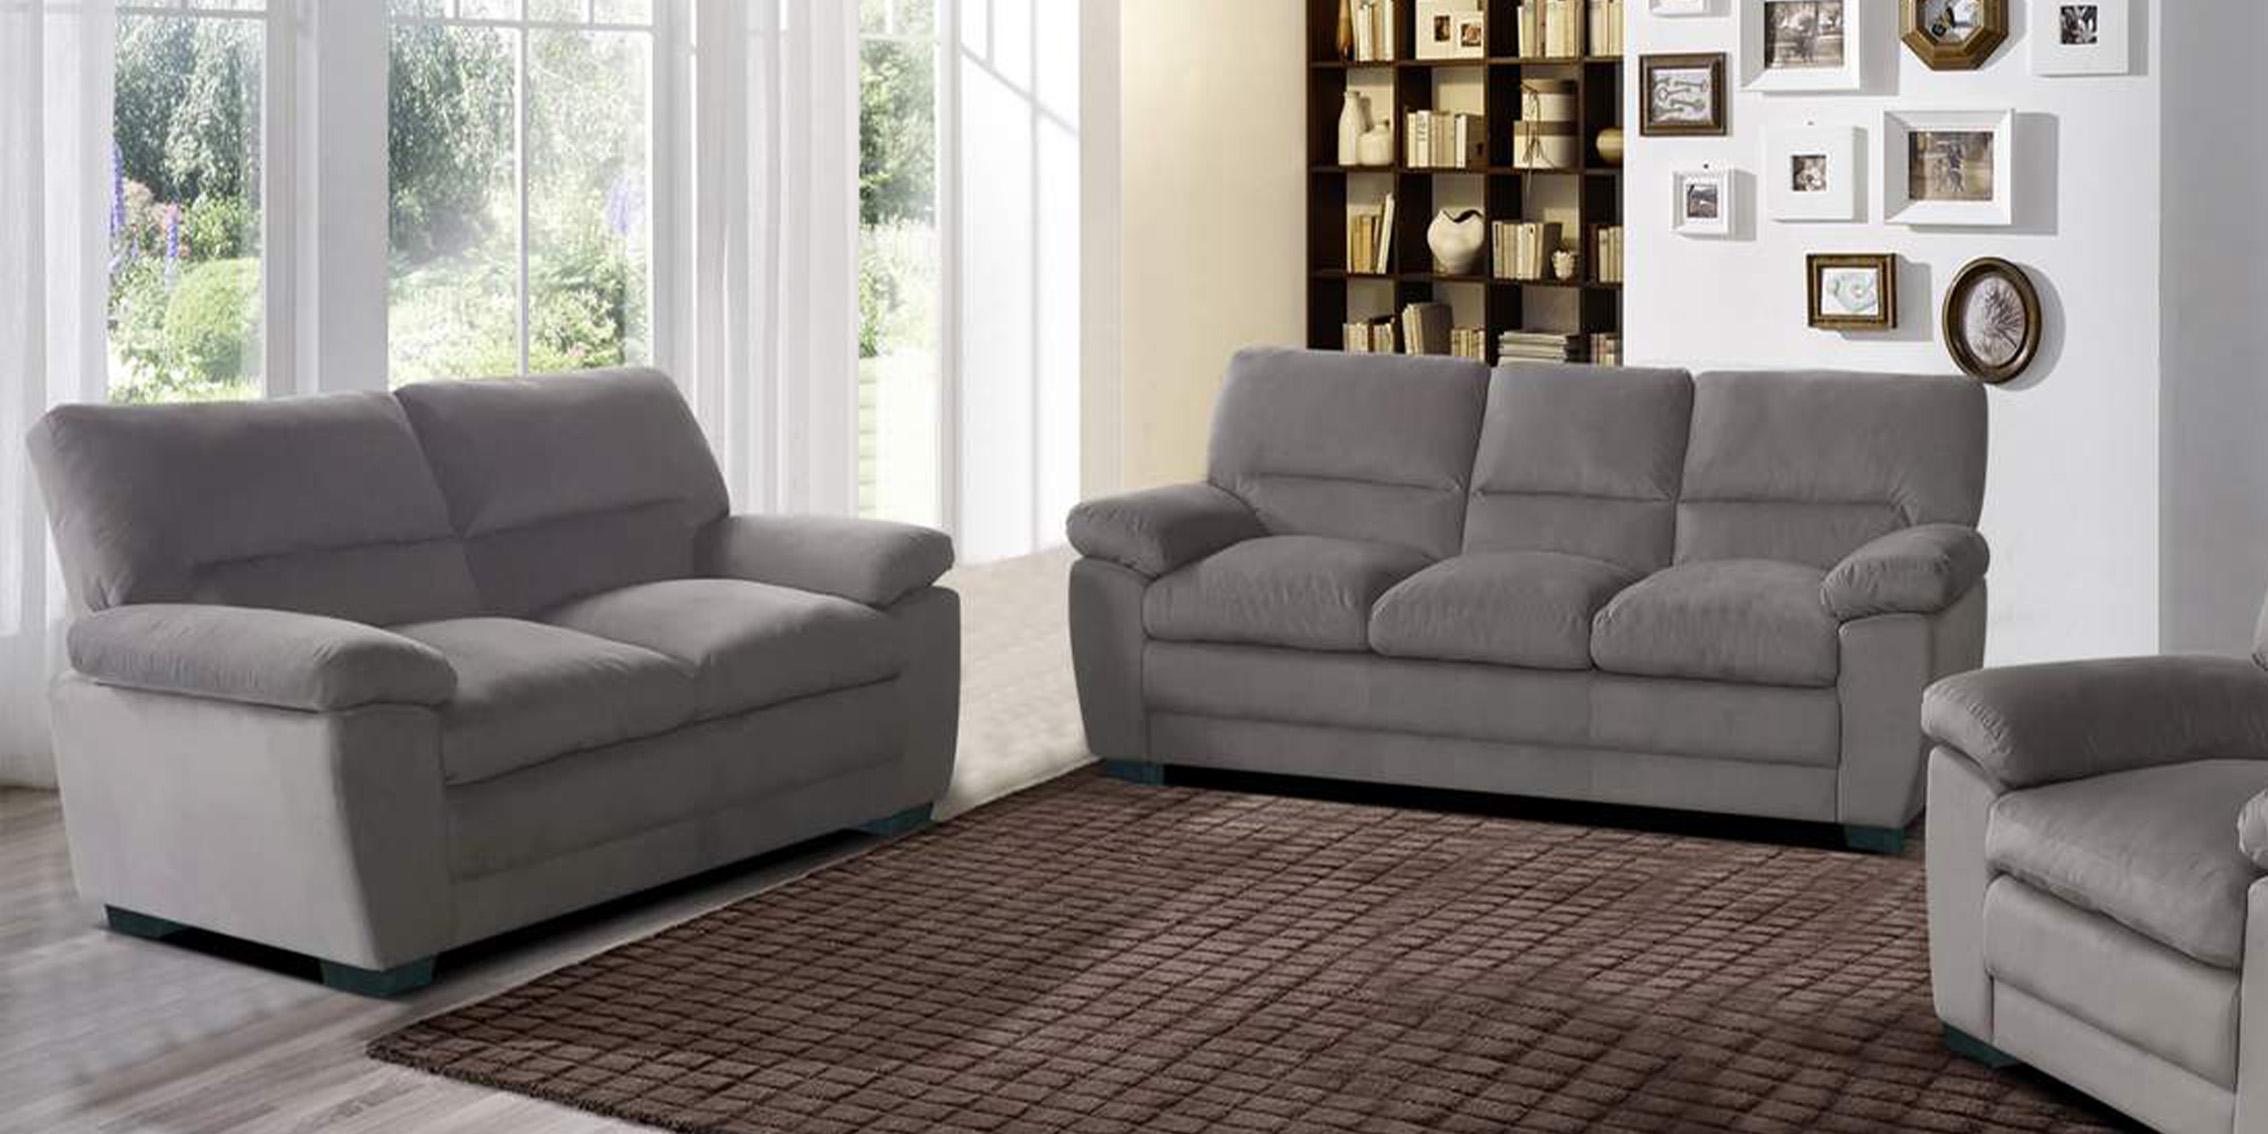 Contemporary, Modern Sofa Set MAXX GHF-808857609687-Set-2 in Gray Fabric